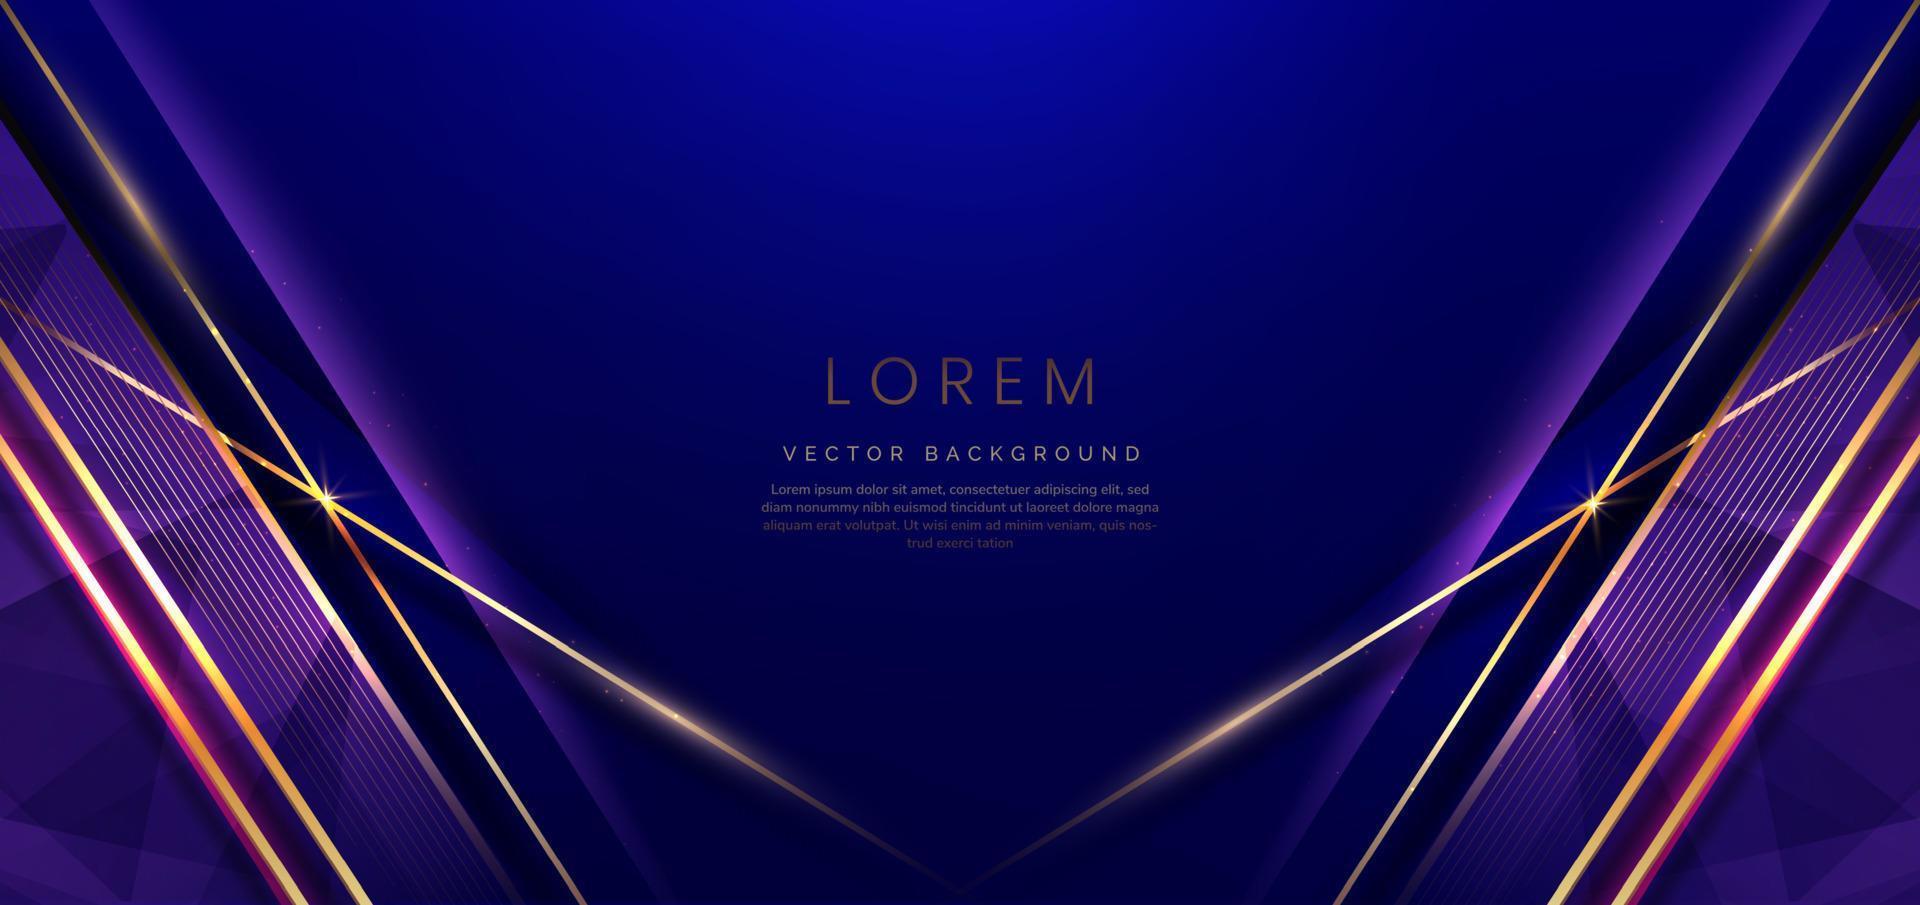 abstrakt elegant mörk blå bakgrund med gyllene linje och belysning effekt gnistra. lyx mall tilldela design. vektor